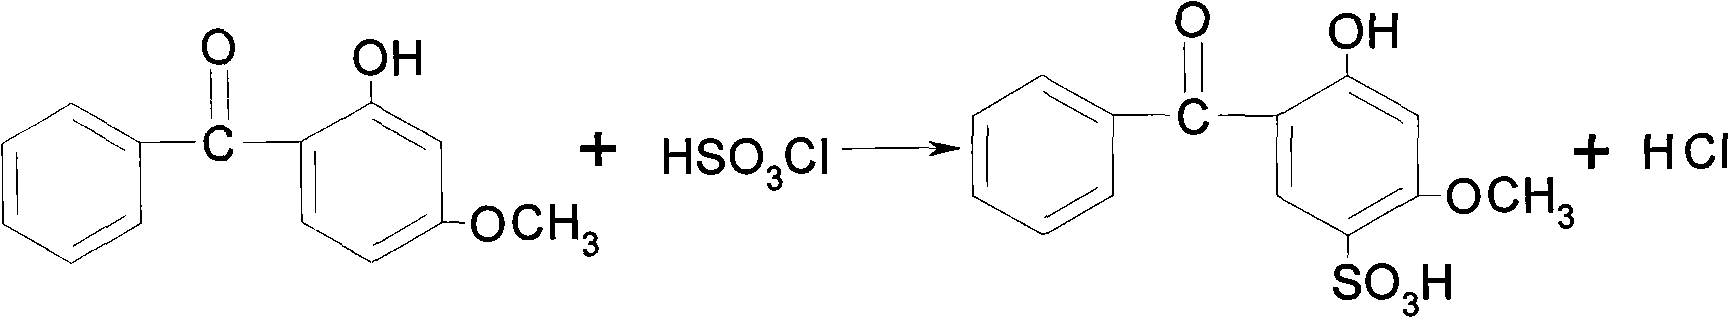 Method for producing 2-hydroxyl-4-methoxybenzophenone-5-sulfonic acid